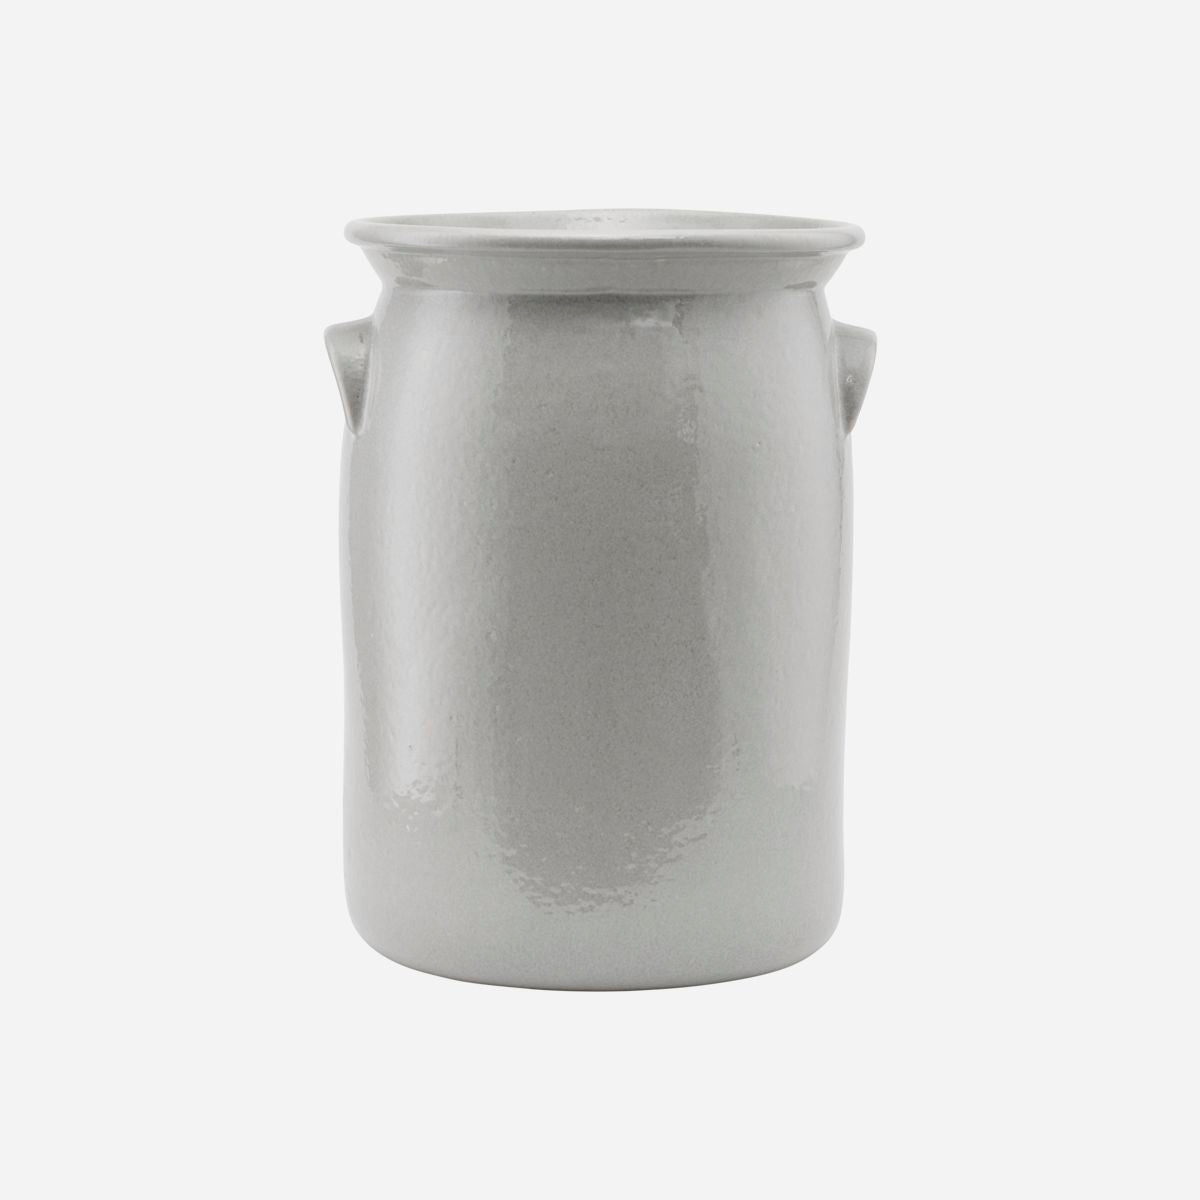 Meraki-Ceramic Pot, Shellish Gray-H: 36 cm, DIA: 25 cm